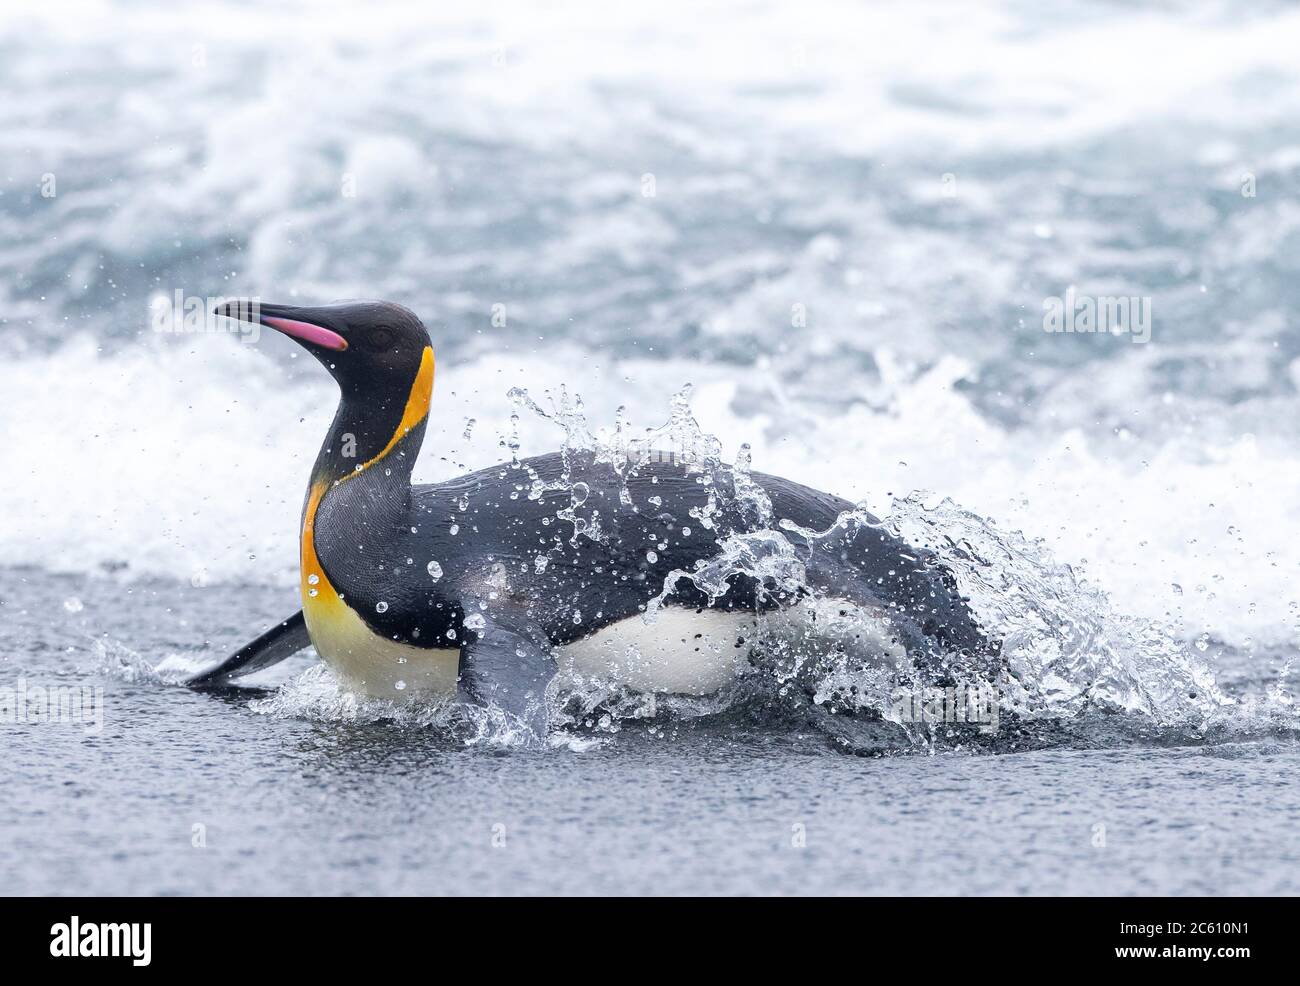 Adult King Penguin (Aptenodytes patagonicus halli) coming on the shore on Macquarie Island, subantarctic Australia. Emerging from the sea through heav Stock Photo